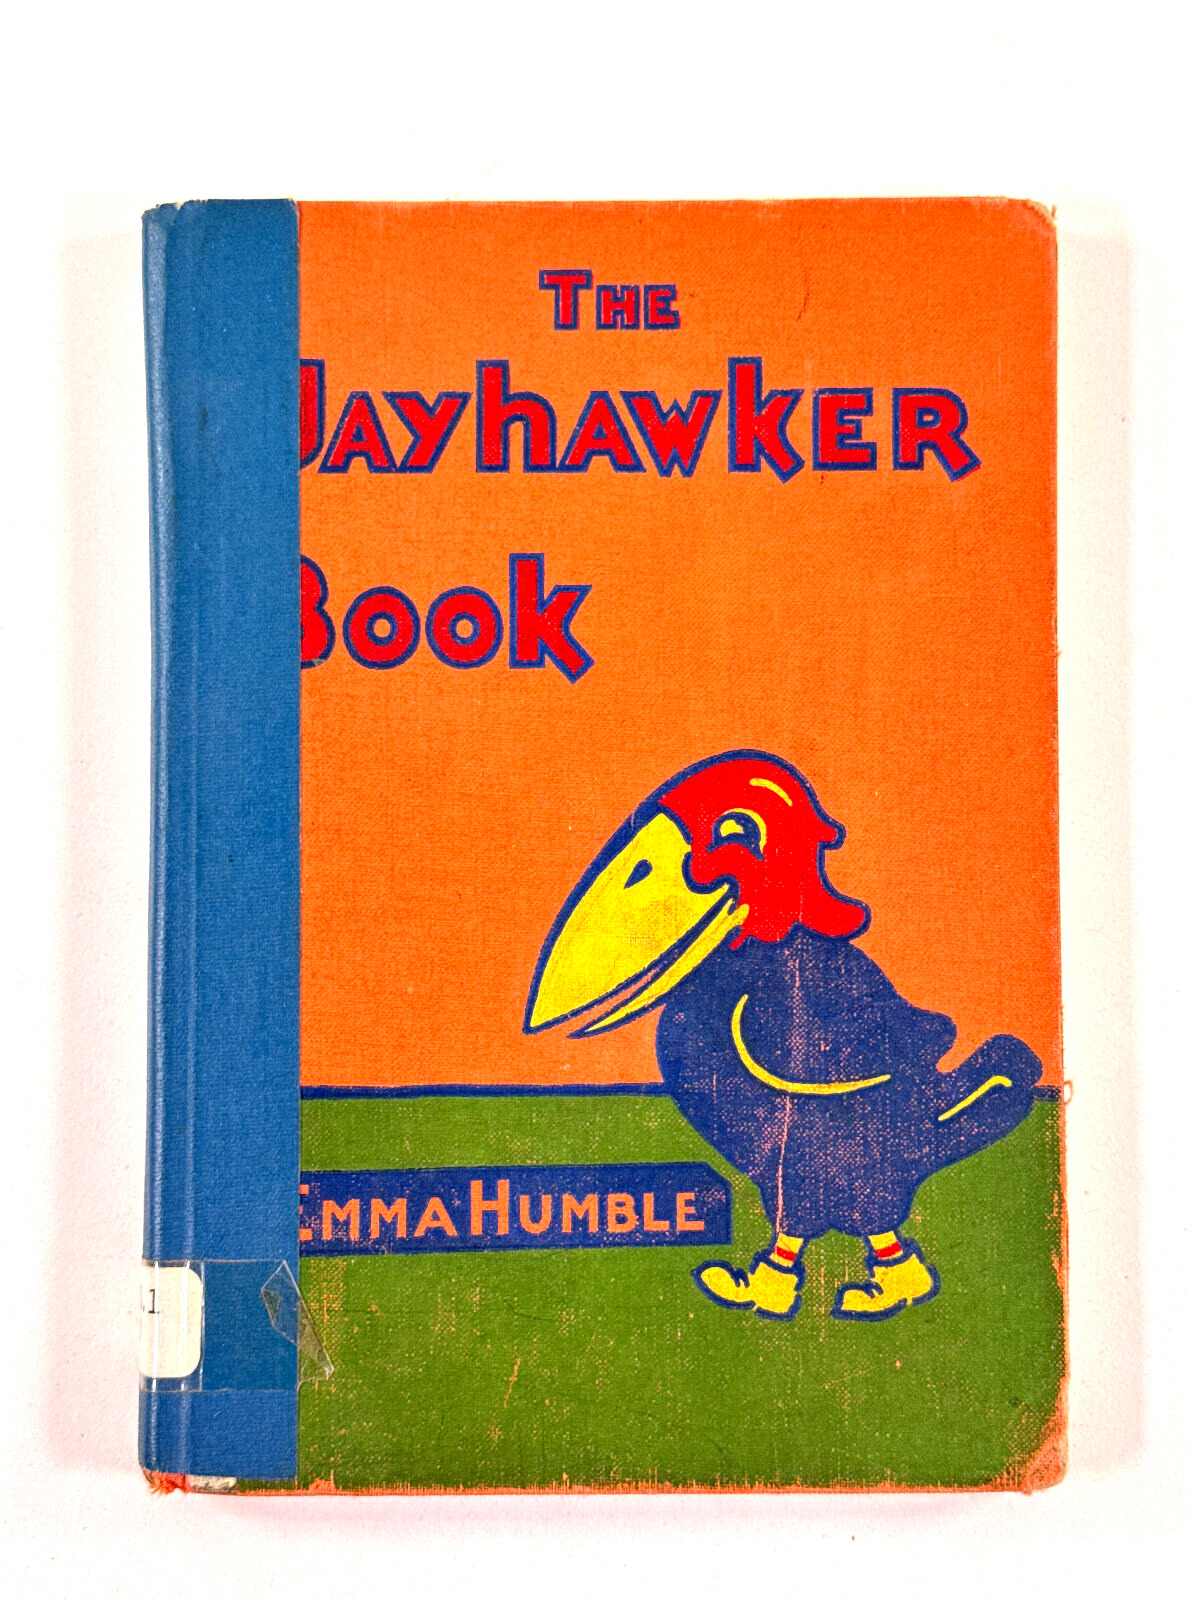 1959 The Jayhawker Book KU University of Kansas jayhawk Emma Humble